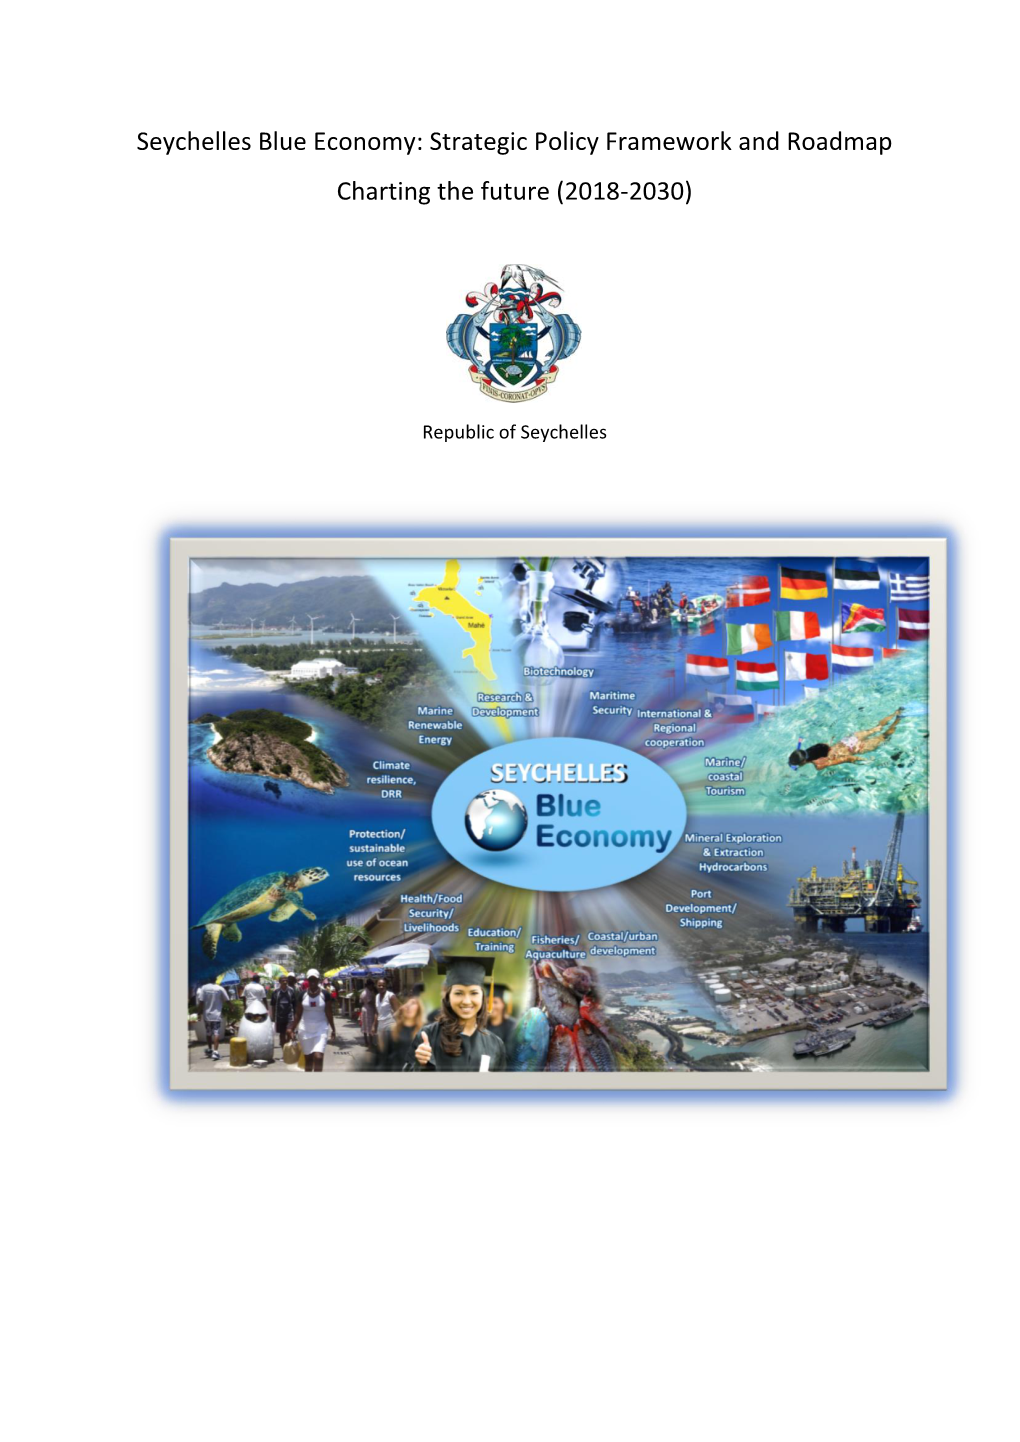 Seychelles Blue Economy: Strategic Policy Framework and Roadmap Charting the Future (2018-2030)